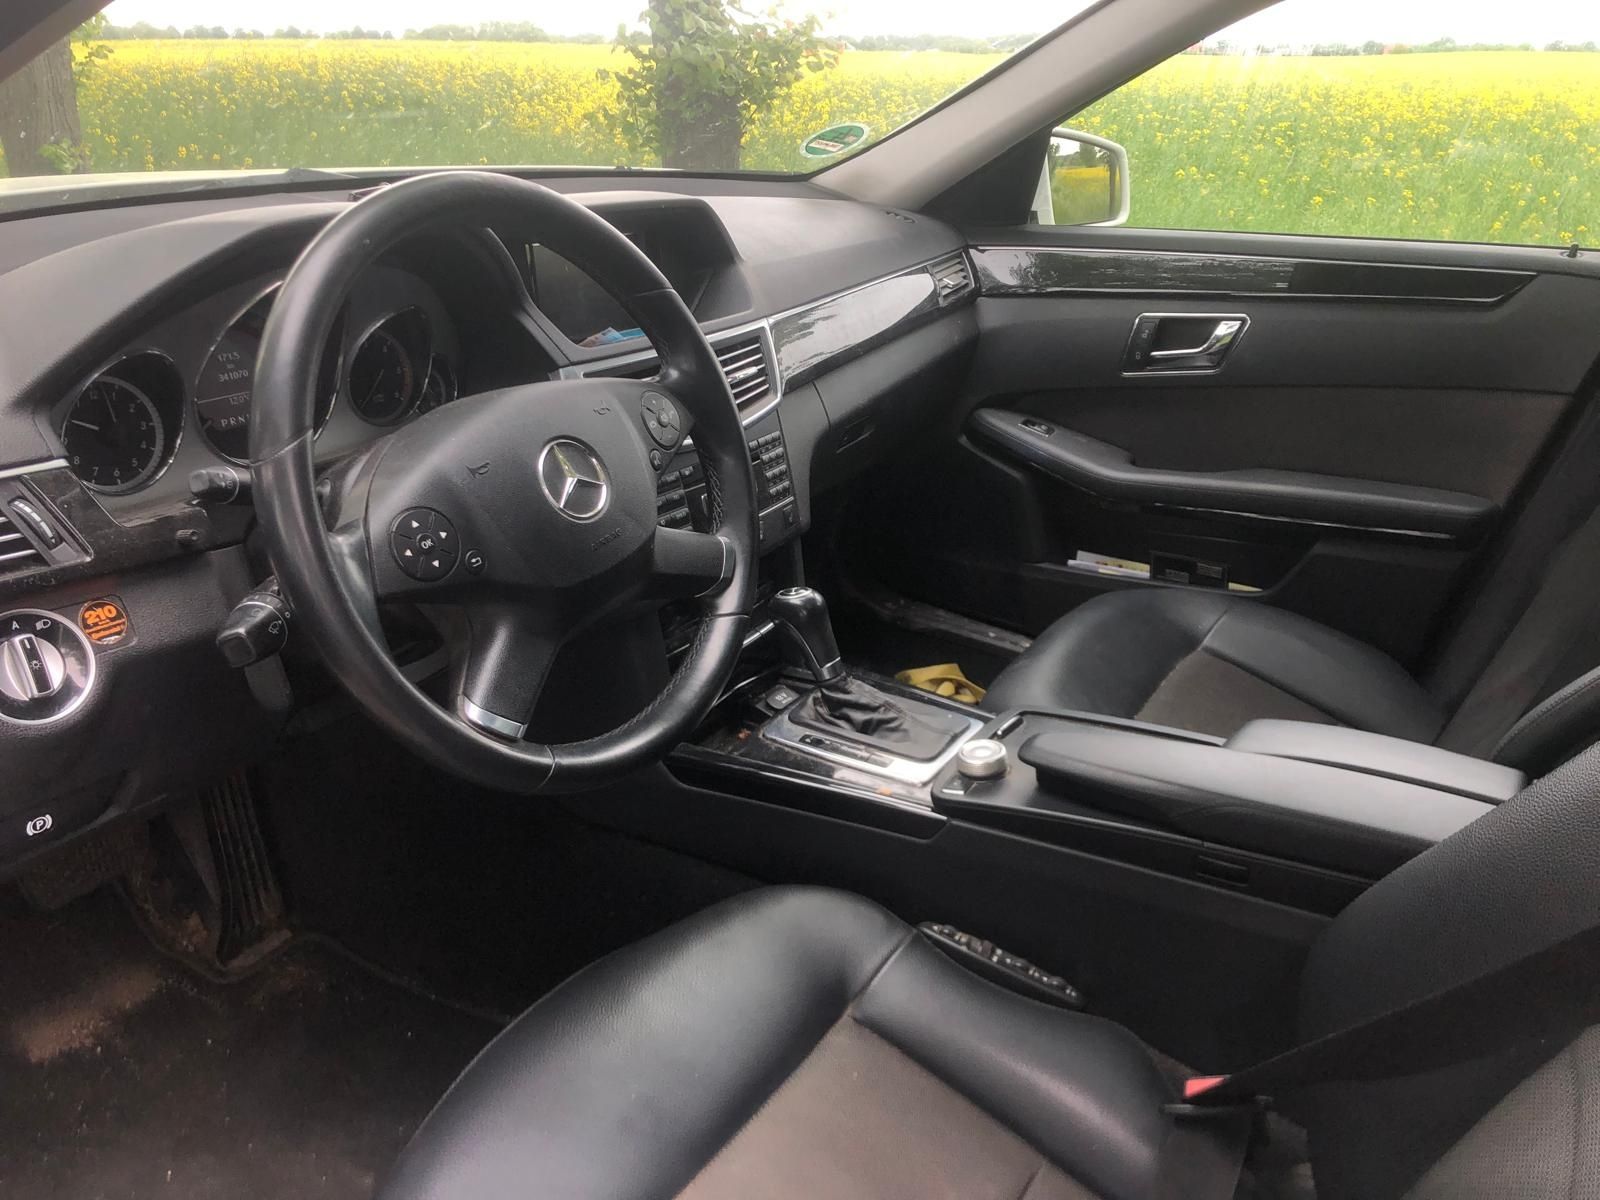 Mercedes e220 CDI, kręci, nie odpala.